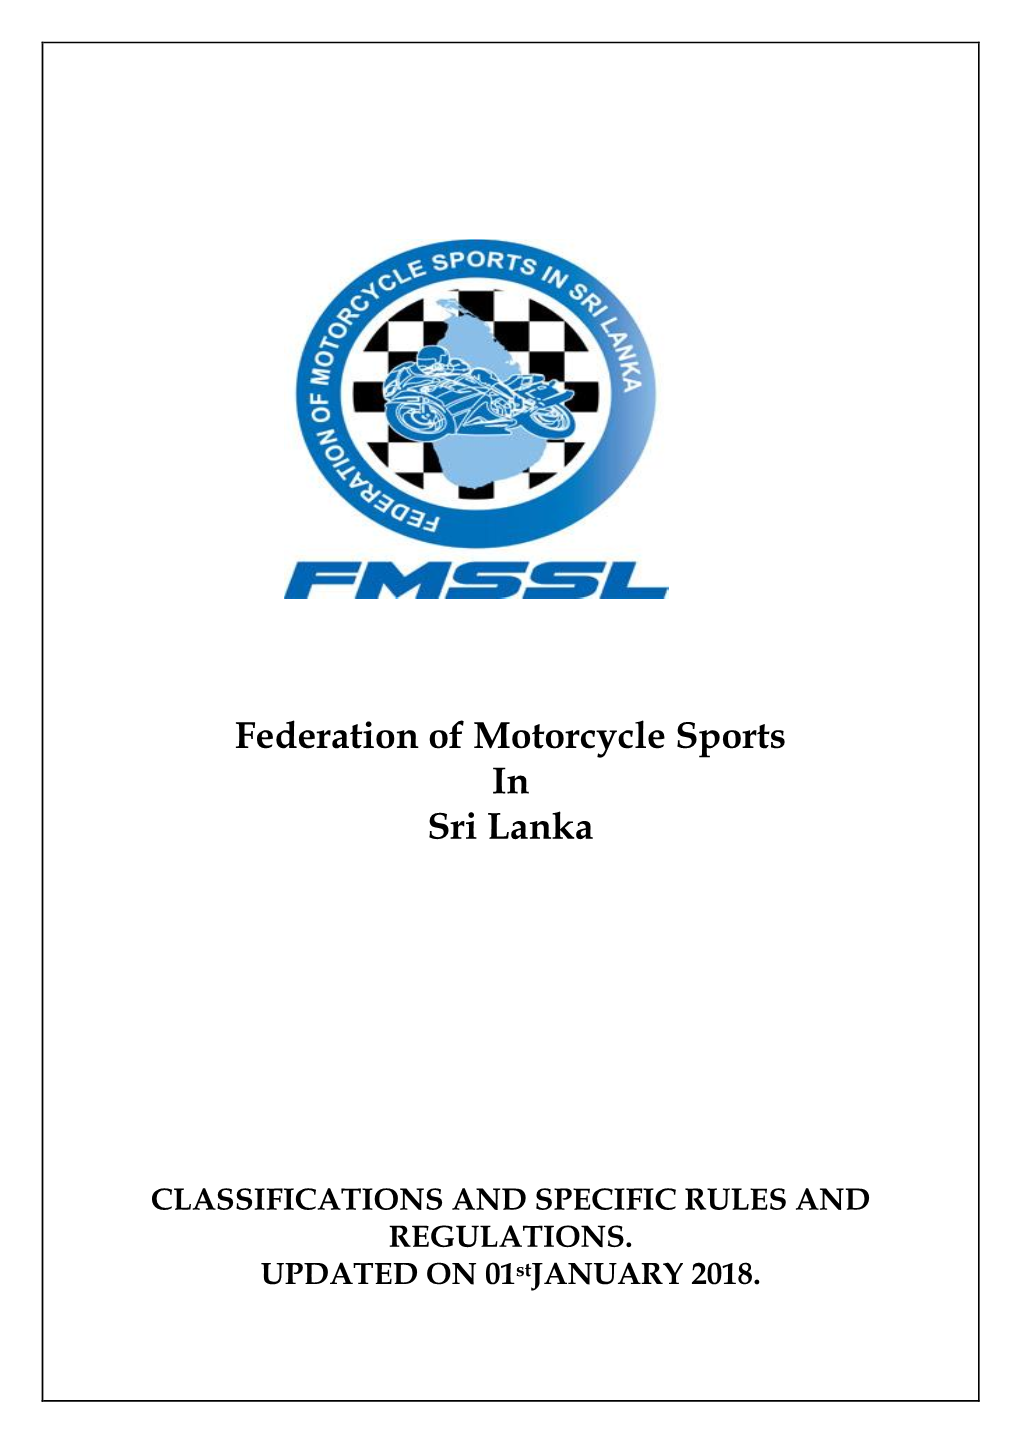 Federation of Motorcycle Sports in Sri Lanka